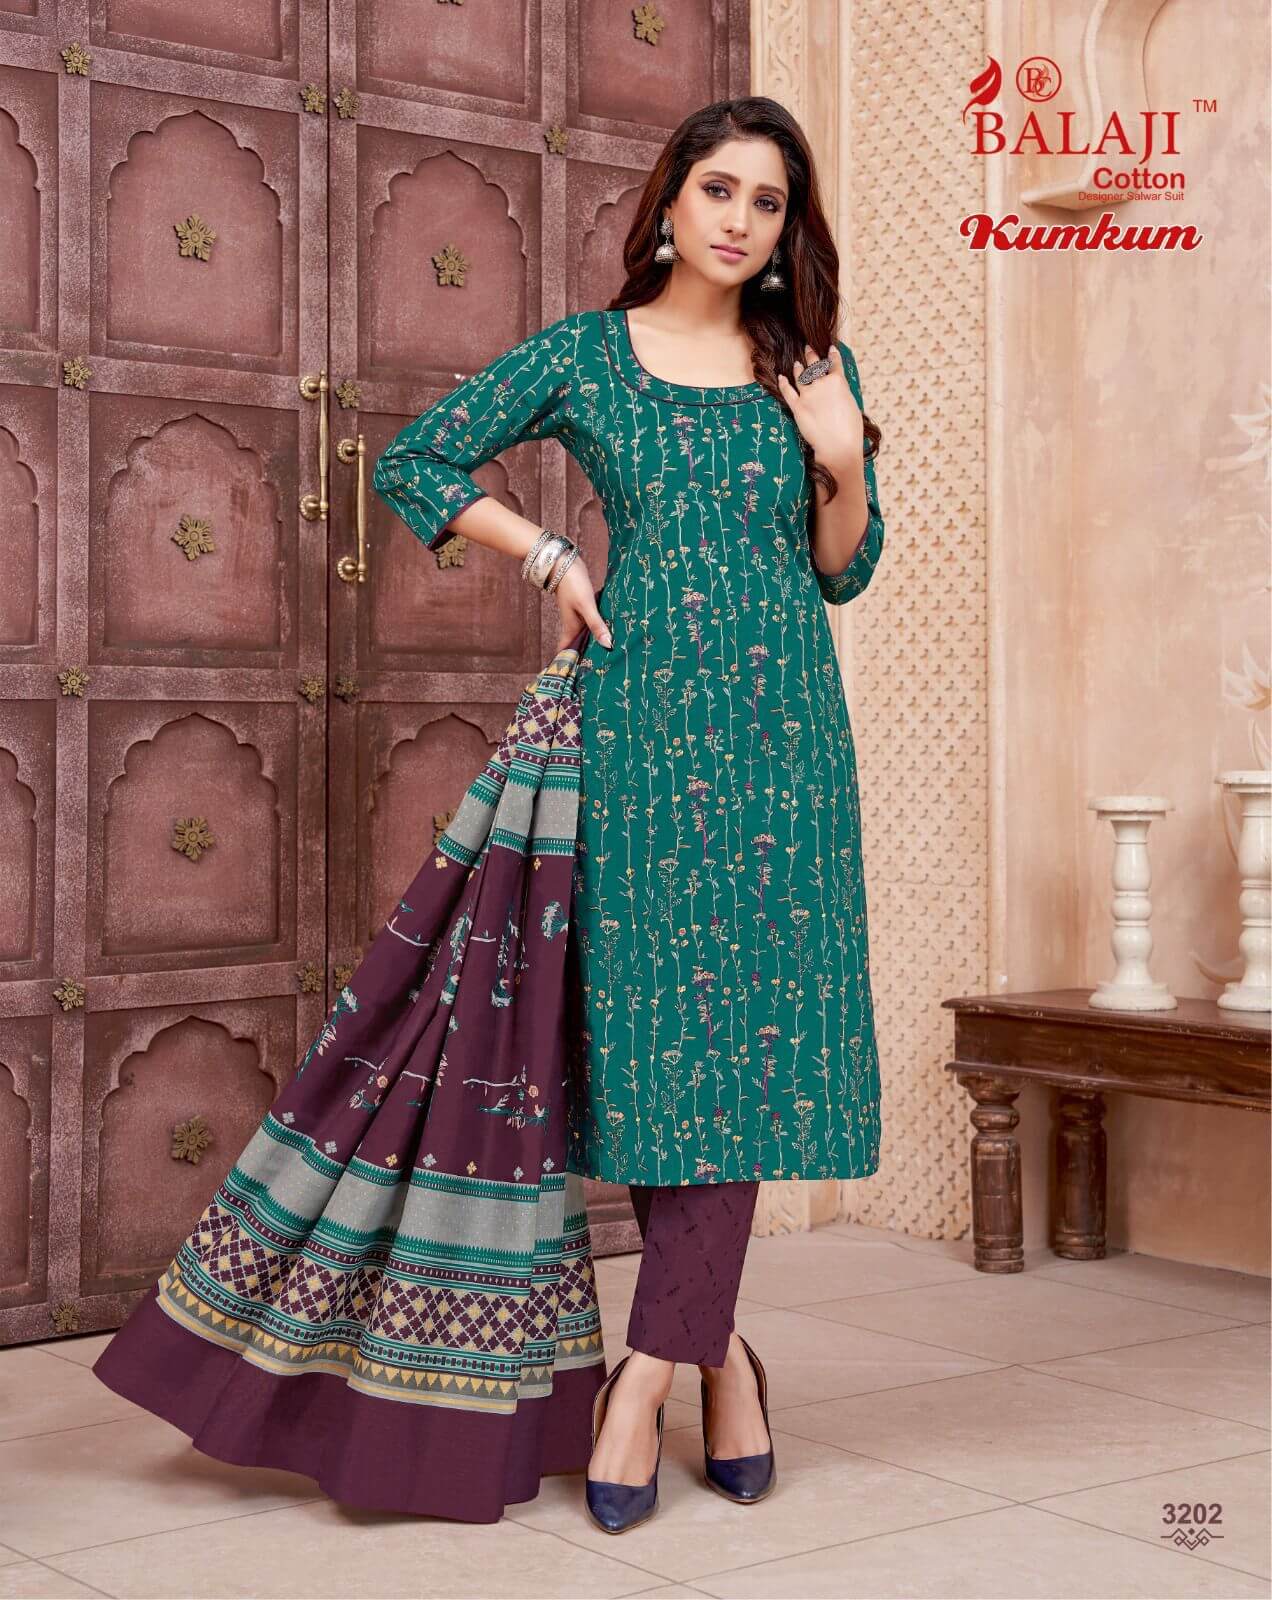 Balaji Cotton Kumkum Vol 32 Readymade Dress Catalog collection 16